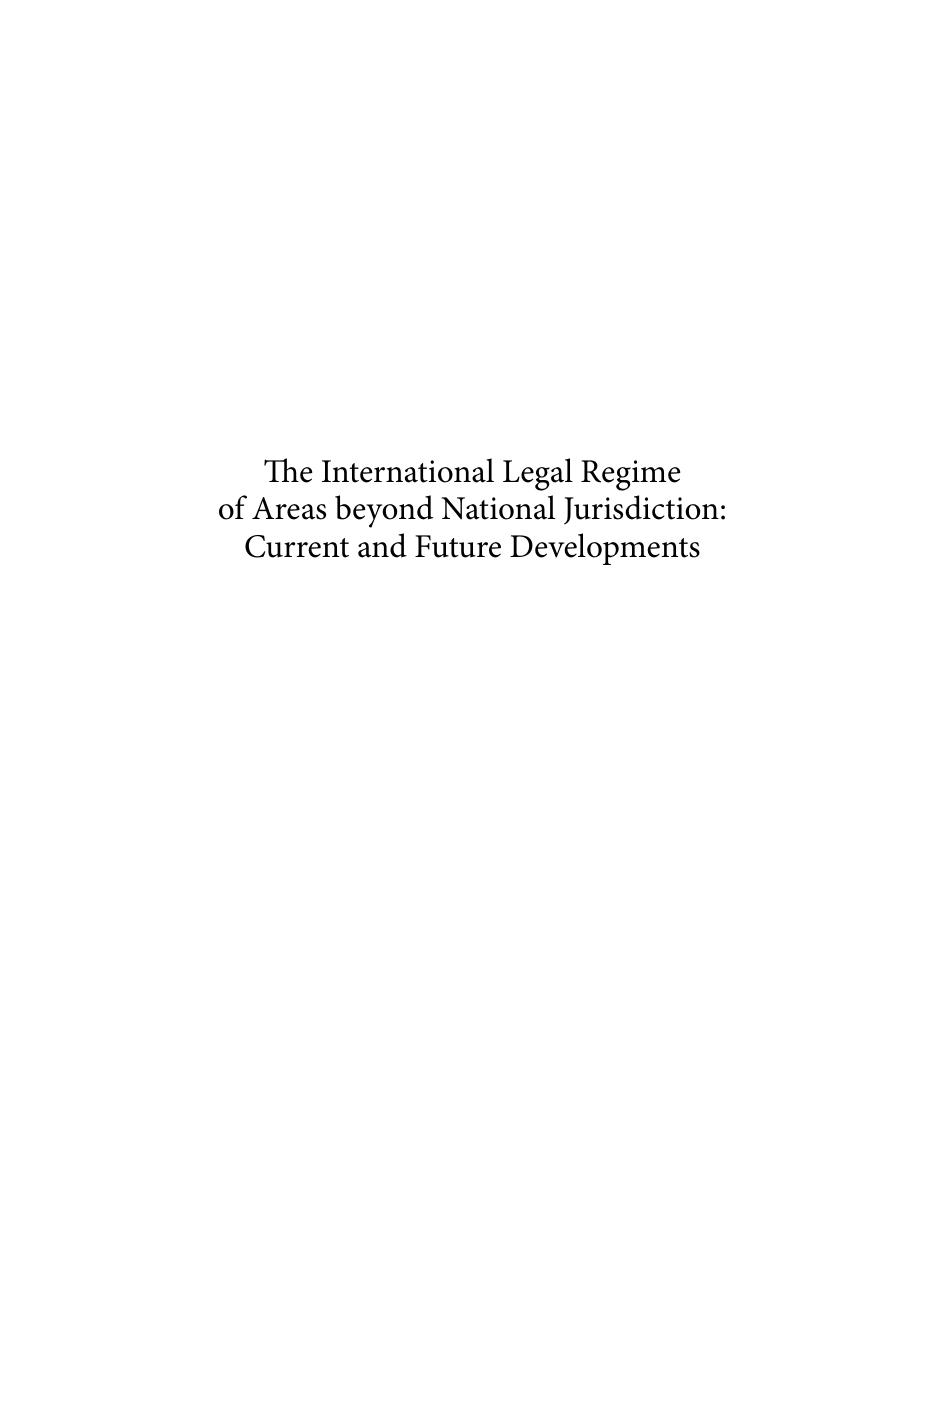 The International Legal Regime of Areas Beyond National Jurisdiction : Current and Future Developments by Erik J. Molenaar; Alex G. Oude Elferink